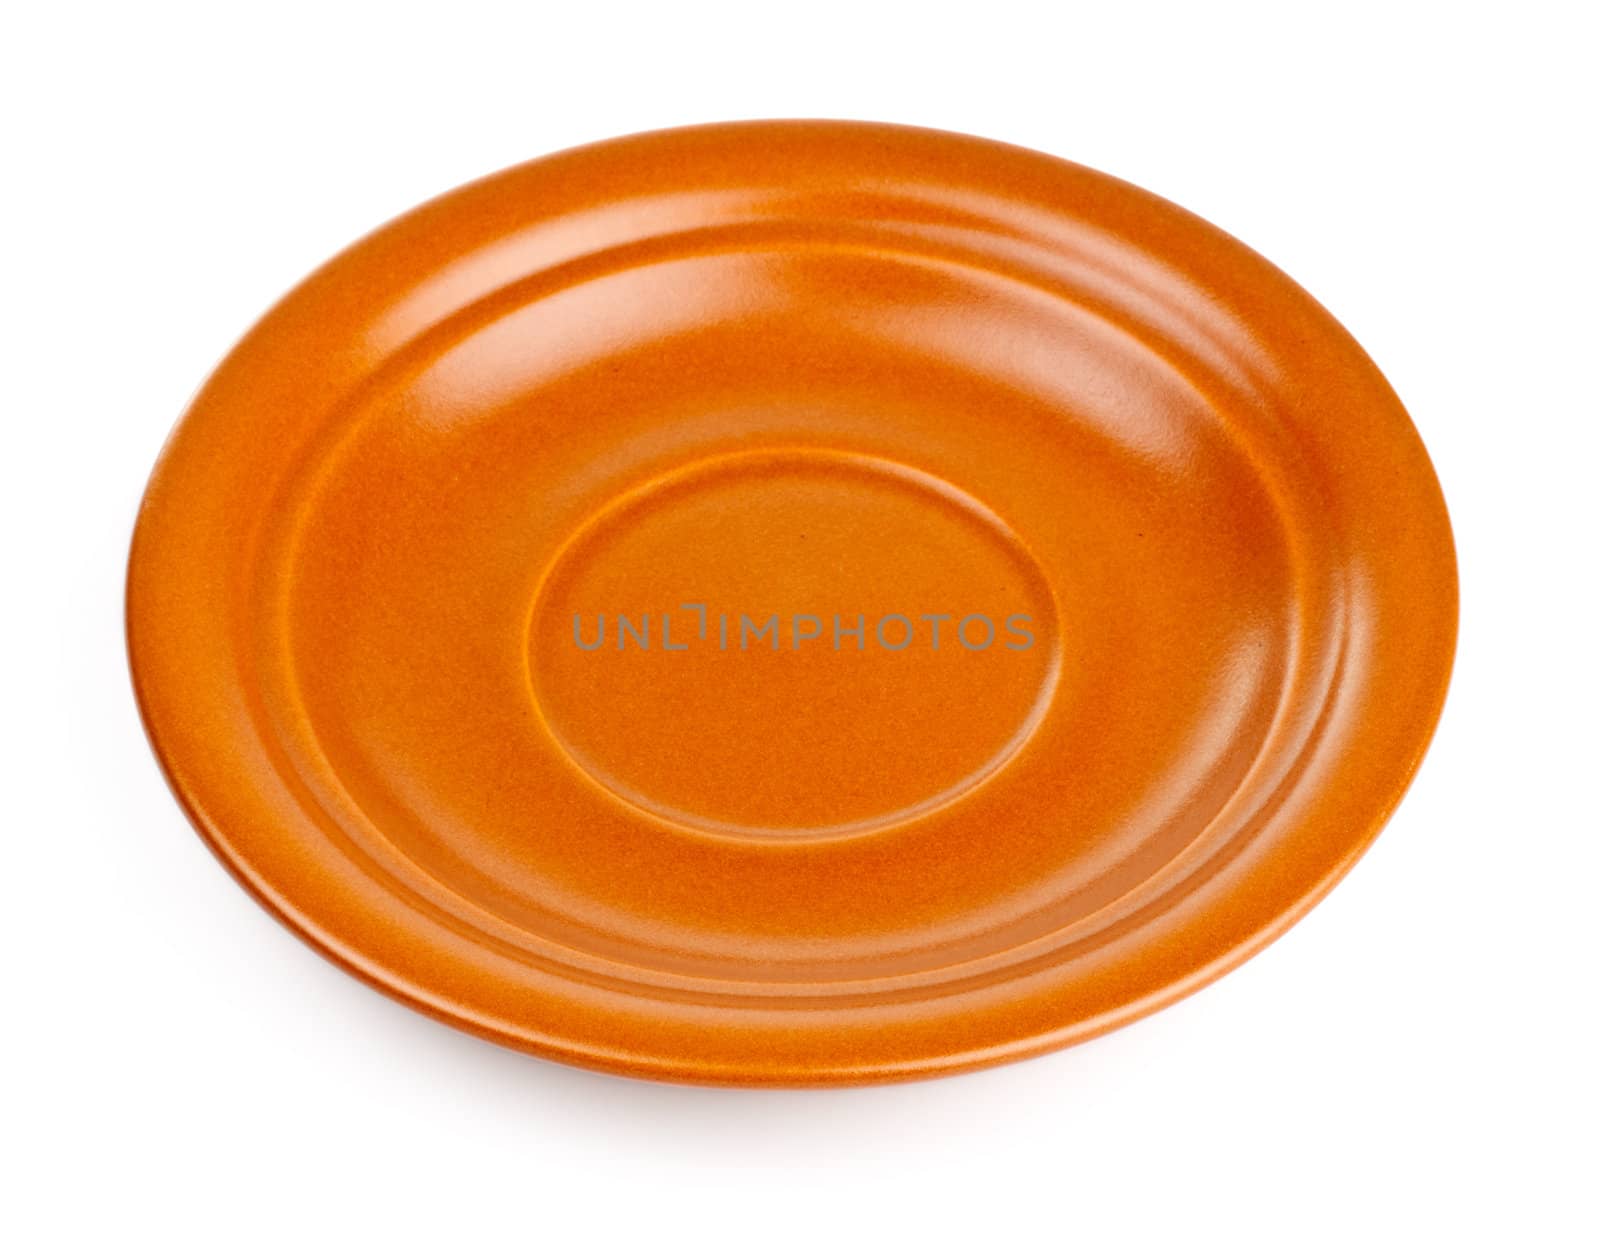 brown ceramic saucer by petr_malyshev